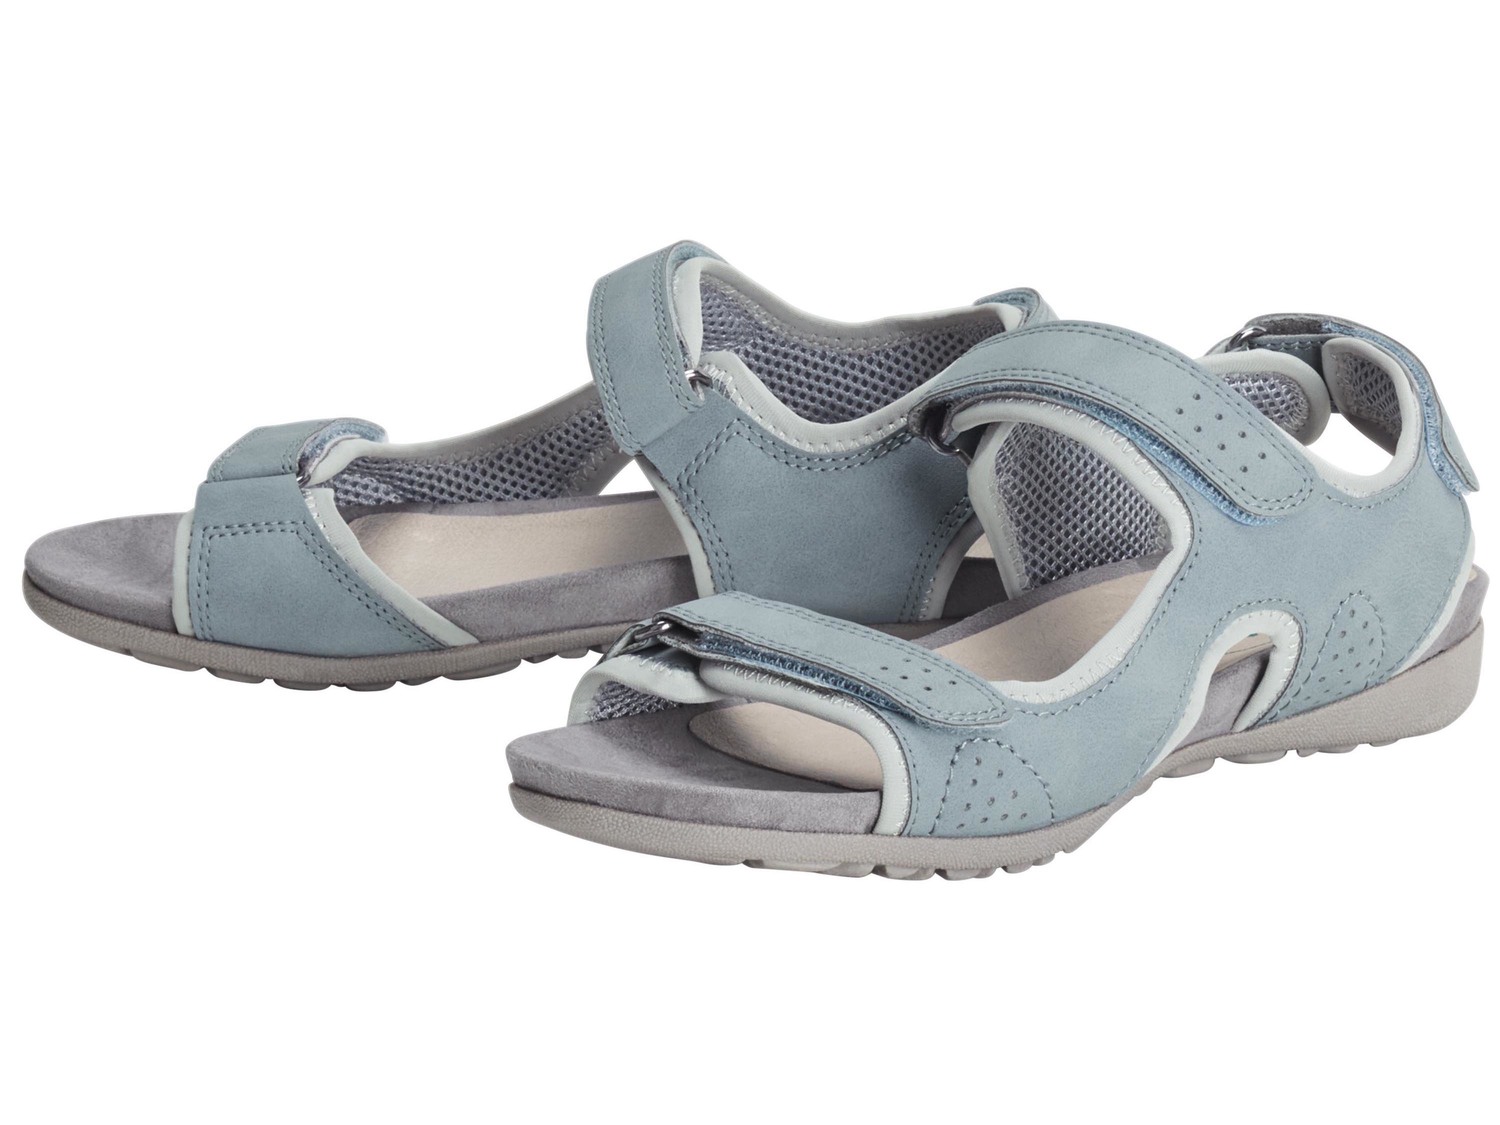 Sandali sportivi comfort da donna , prezzo 12.99 &#8364;  
Misure: 36-40